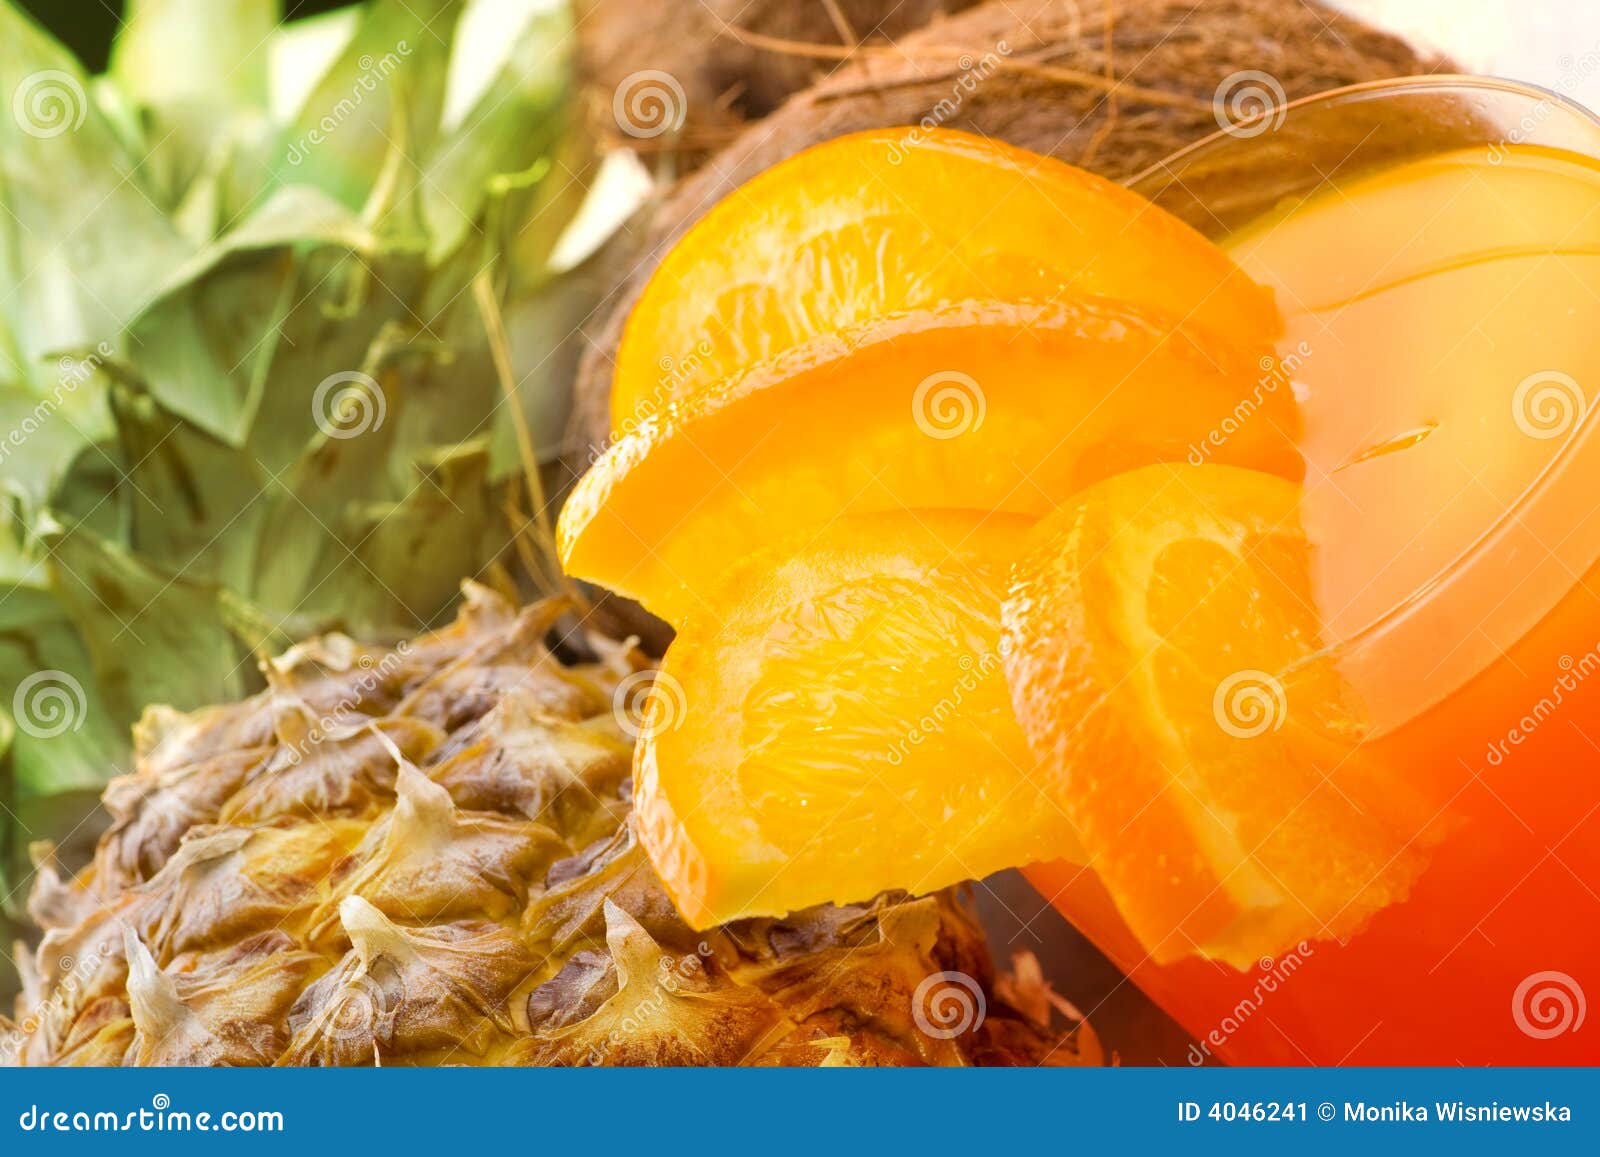 Tropical Drink stock image. Image of citrus, food, garnish - 4046241